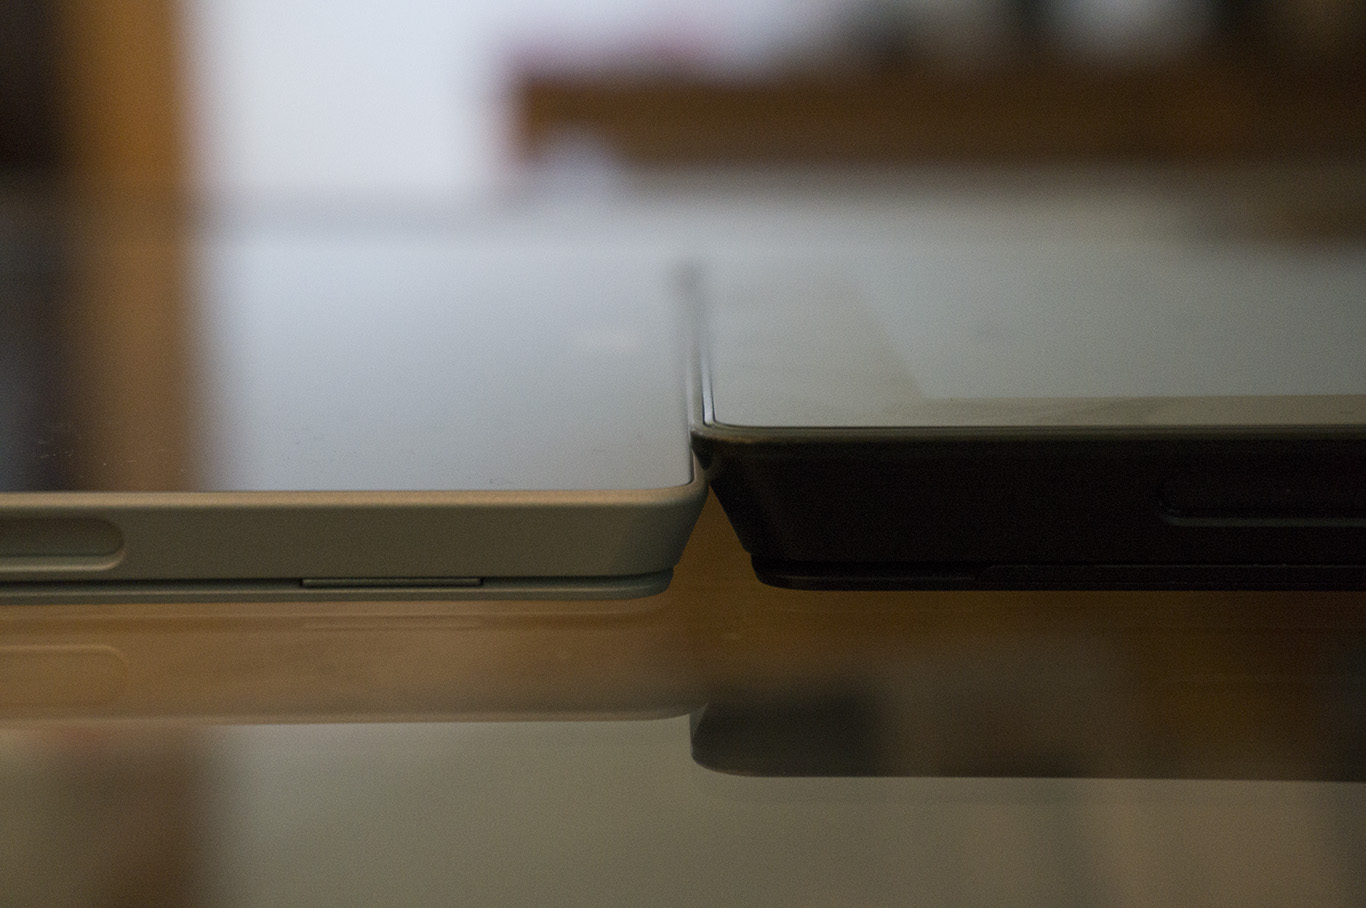 alt="Surface Pro 3 vs Surface Pro 1"